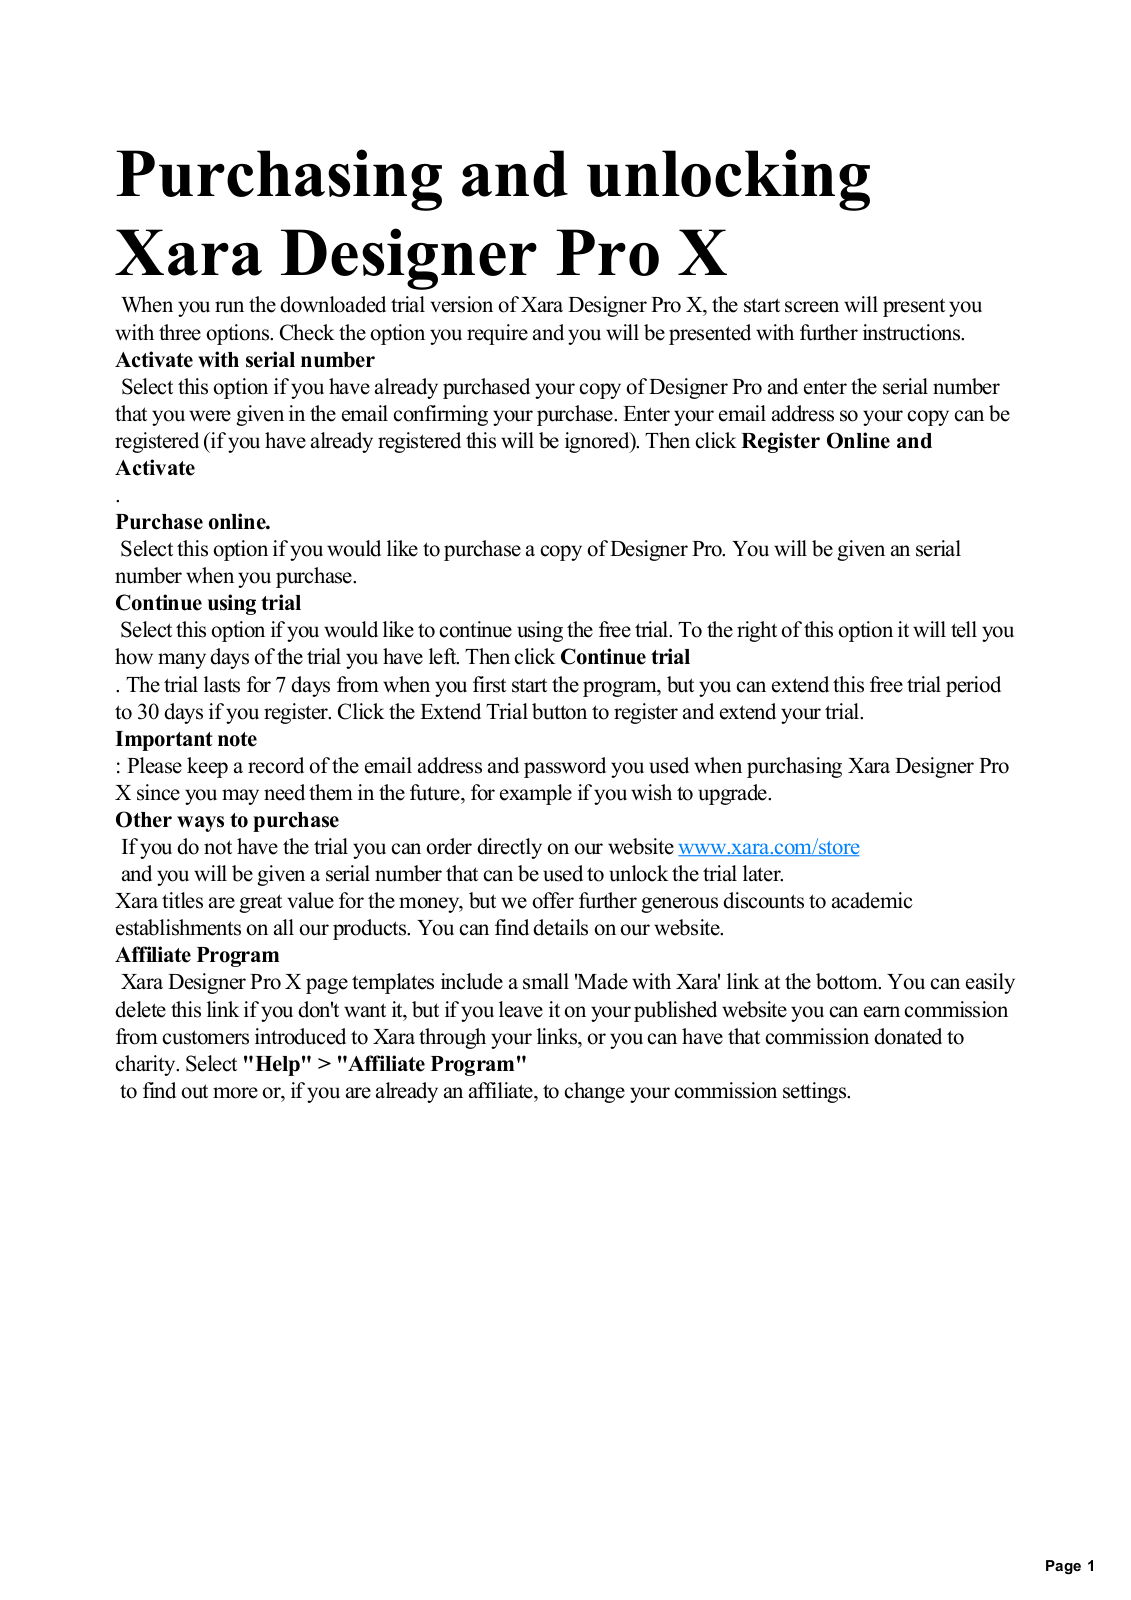 Xara Designer Pro - X User Manual